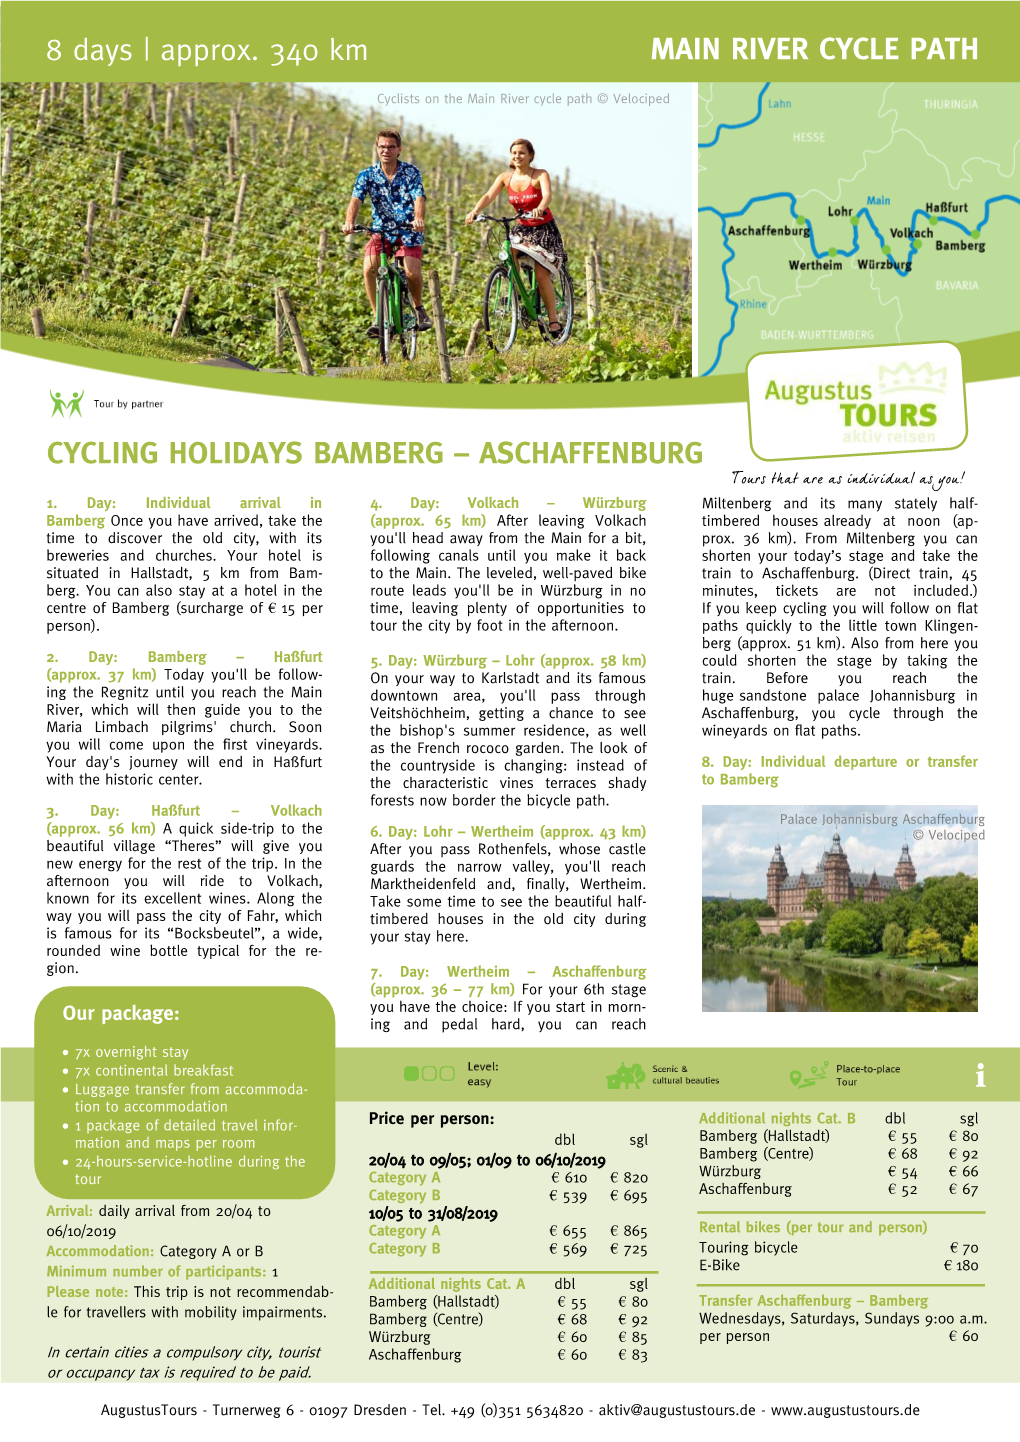 MAIN RIVER CYCLE PATH 8 Days | Approx. 340 Km CYCLING HOLIDAYS BAMBERG – ASCHAFFENBURG